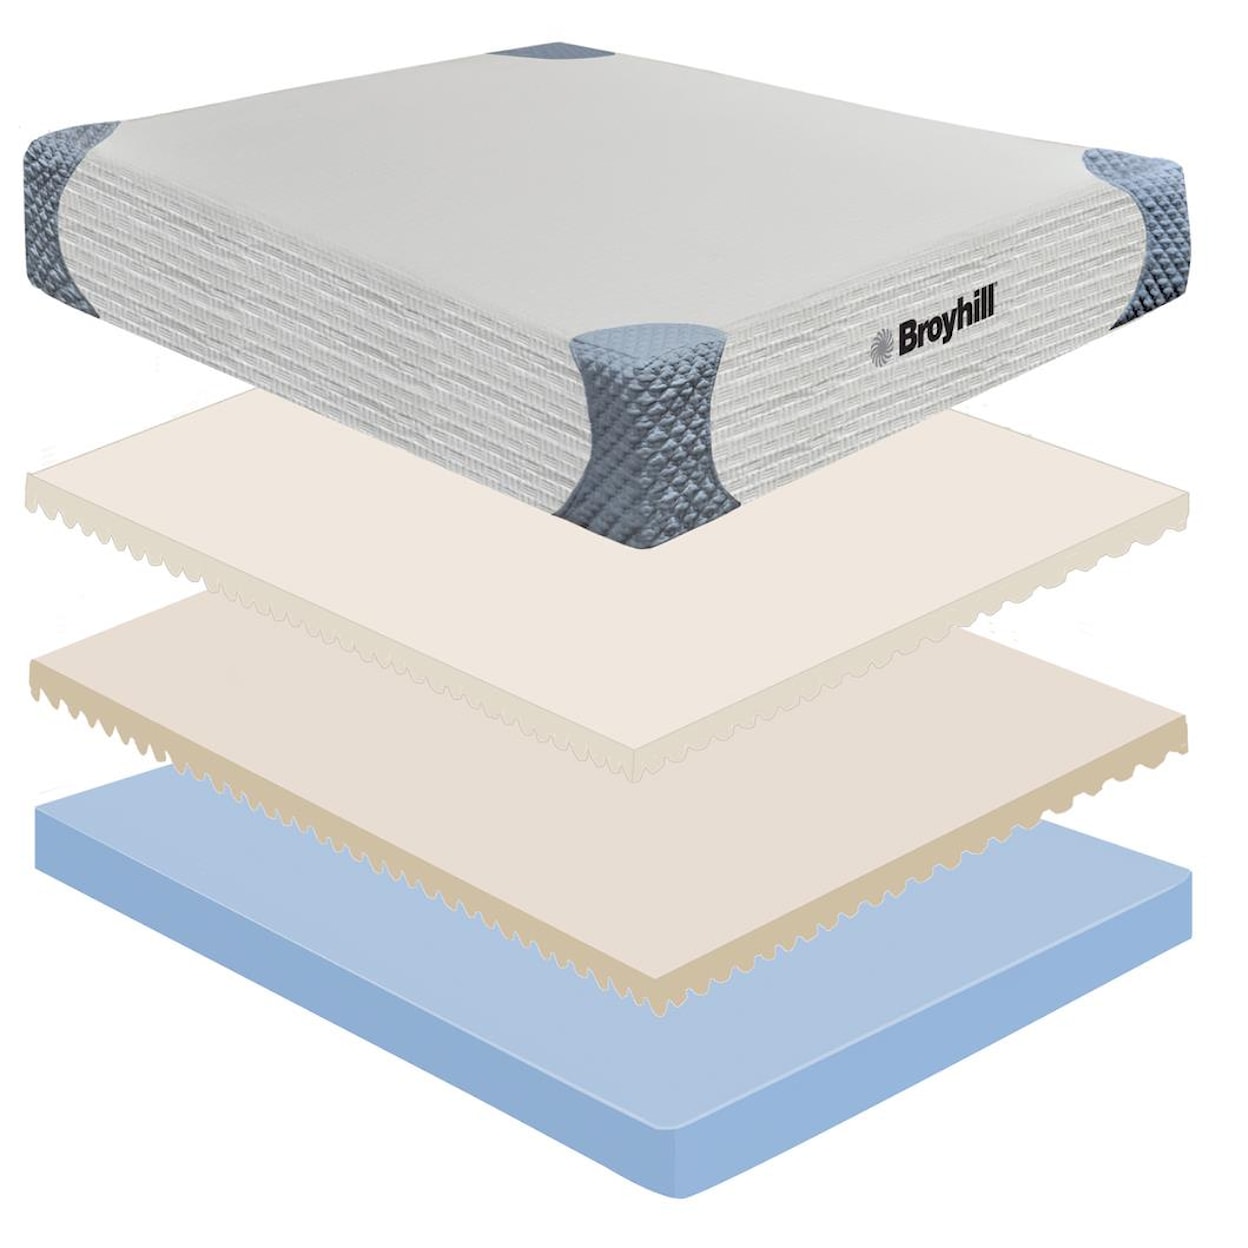 Boyd Specialty Sleep Sensura King Plush Memory Foam Mattress